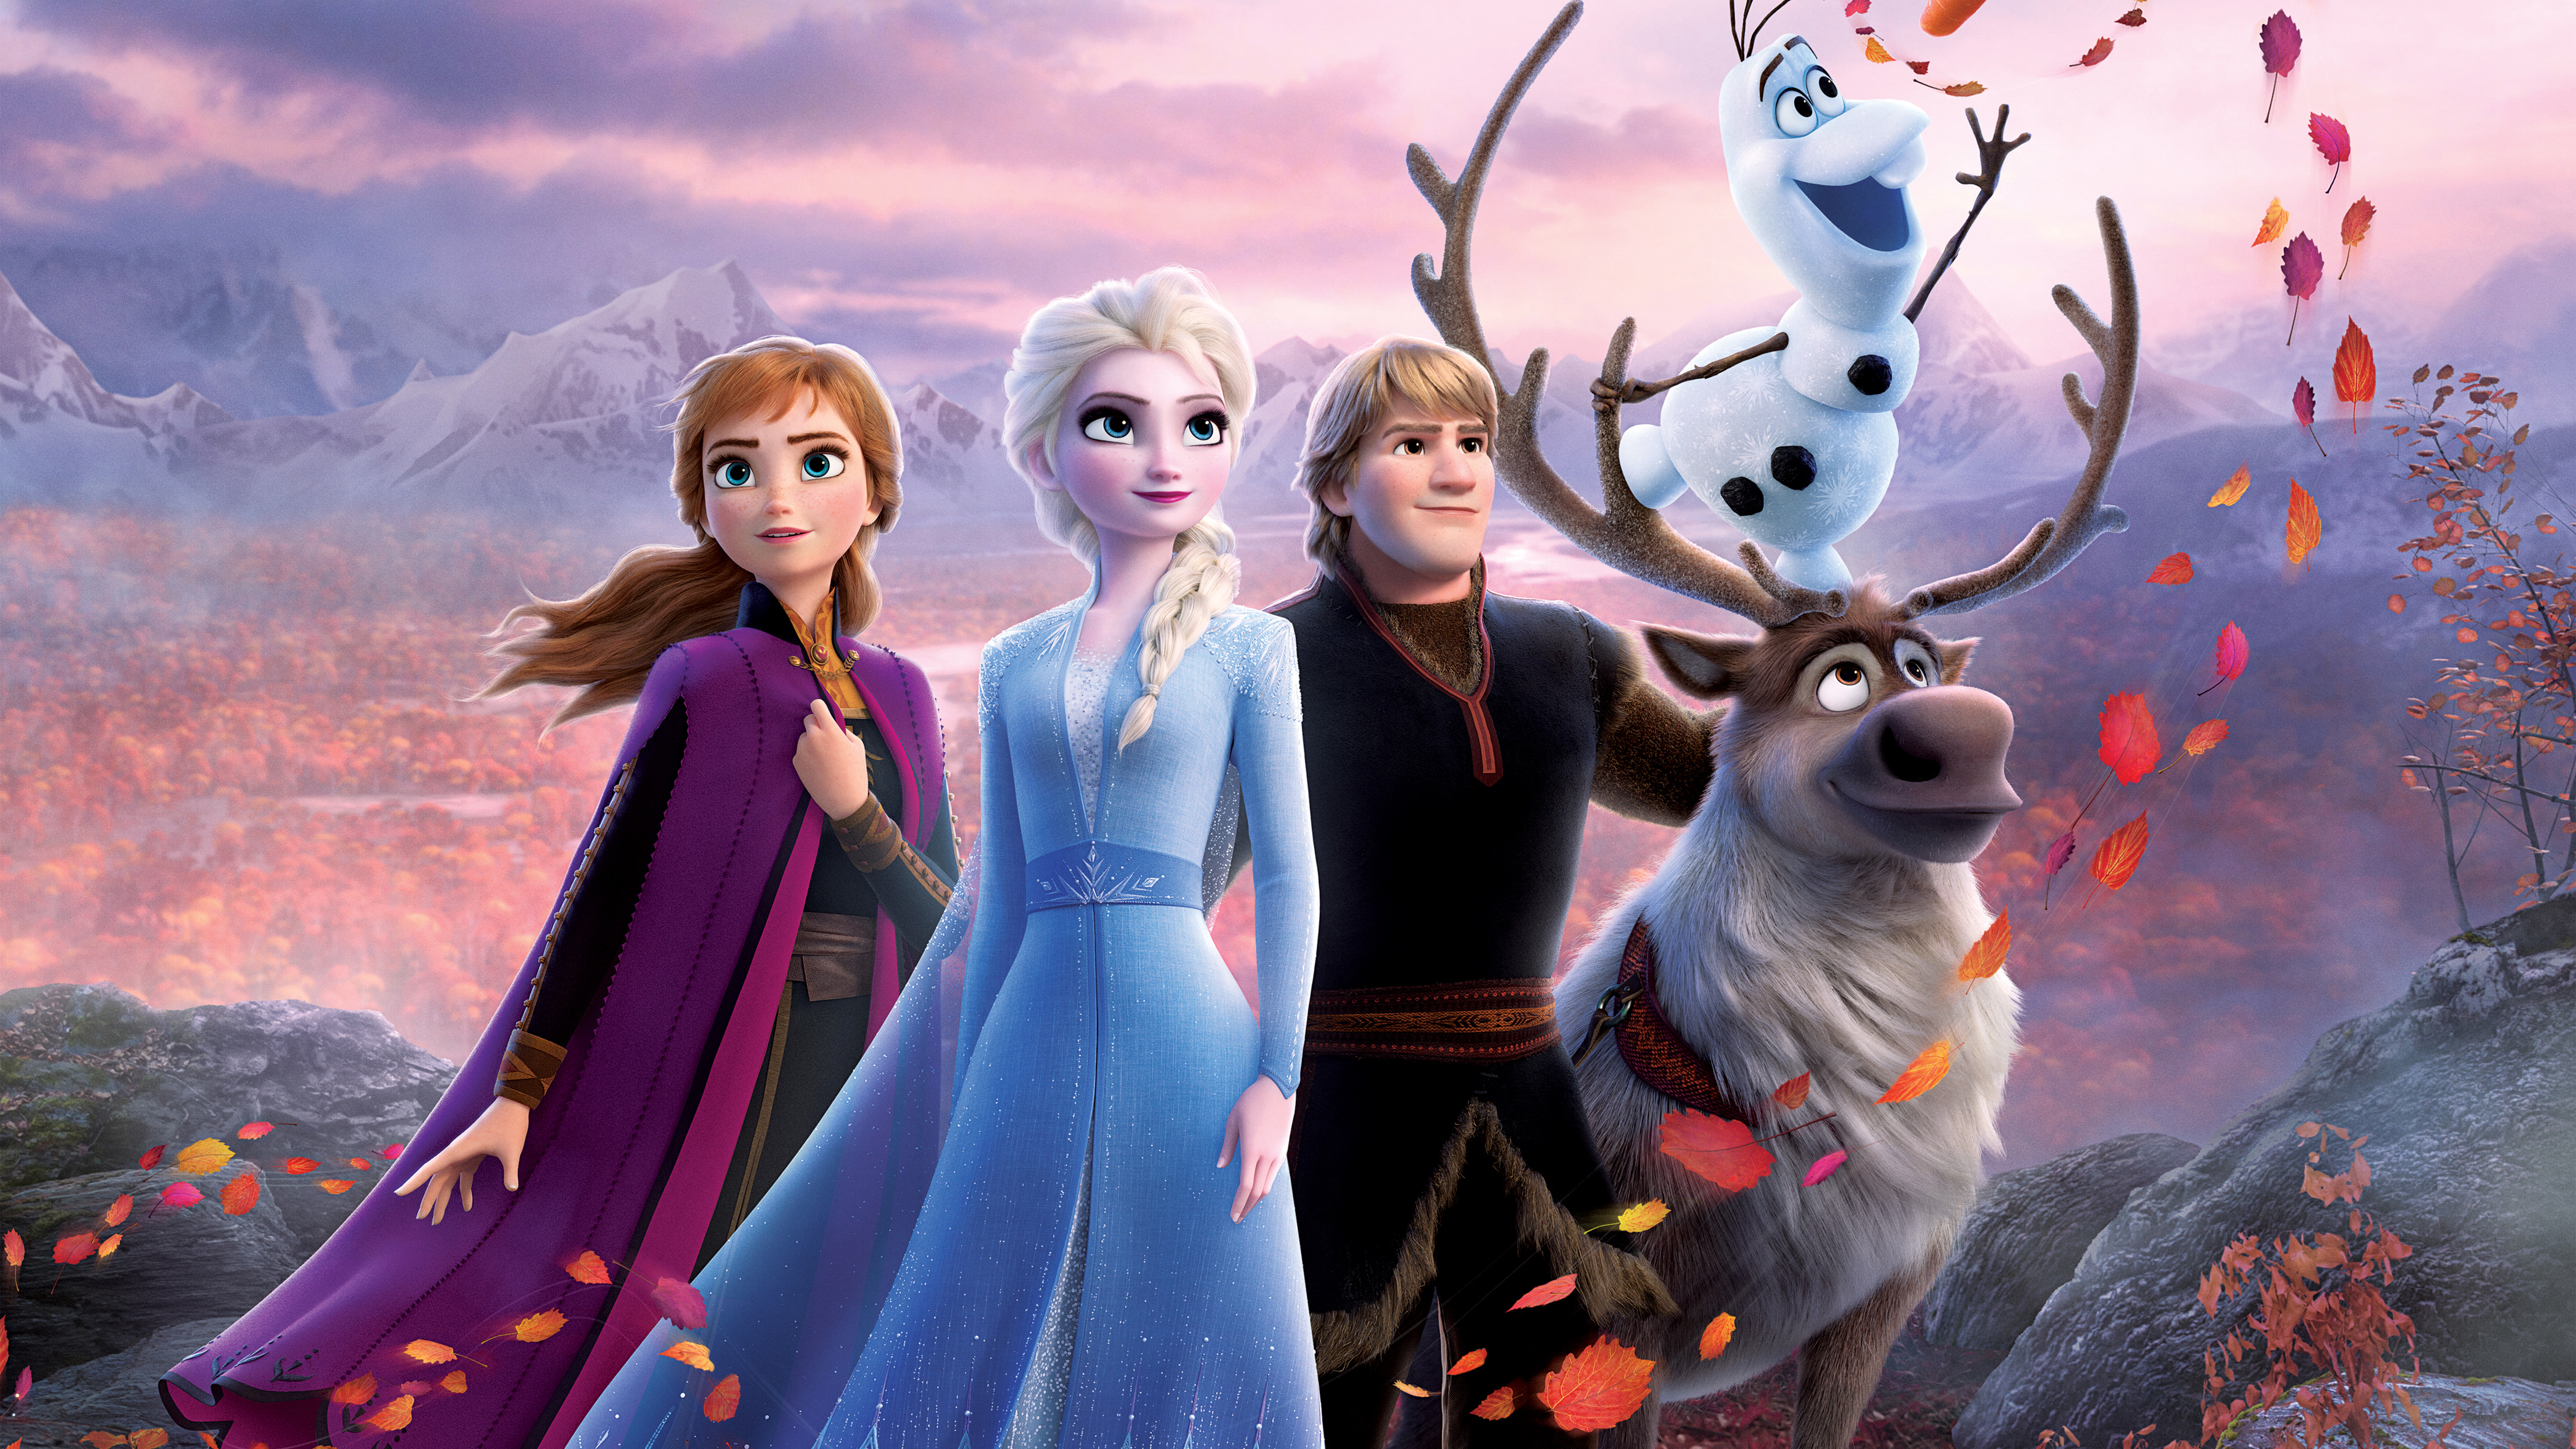 Pin by  𝓕𝓲𝓻𝓮 𝓠𝓾𝓮𝓮𝓷 𝓐𝓷𝓷 on Frozen II Queen Anna and Elsa  Frozen  wallpaper Frozen pictures Frozen disney movie